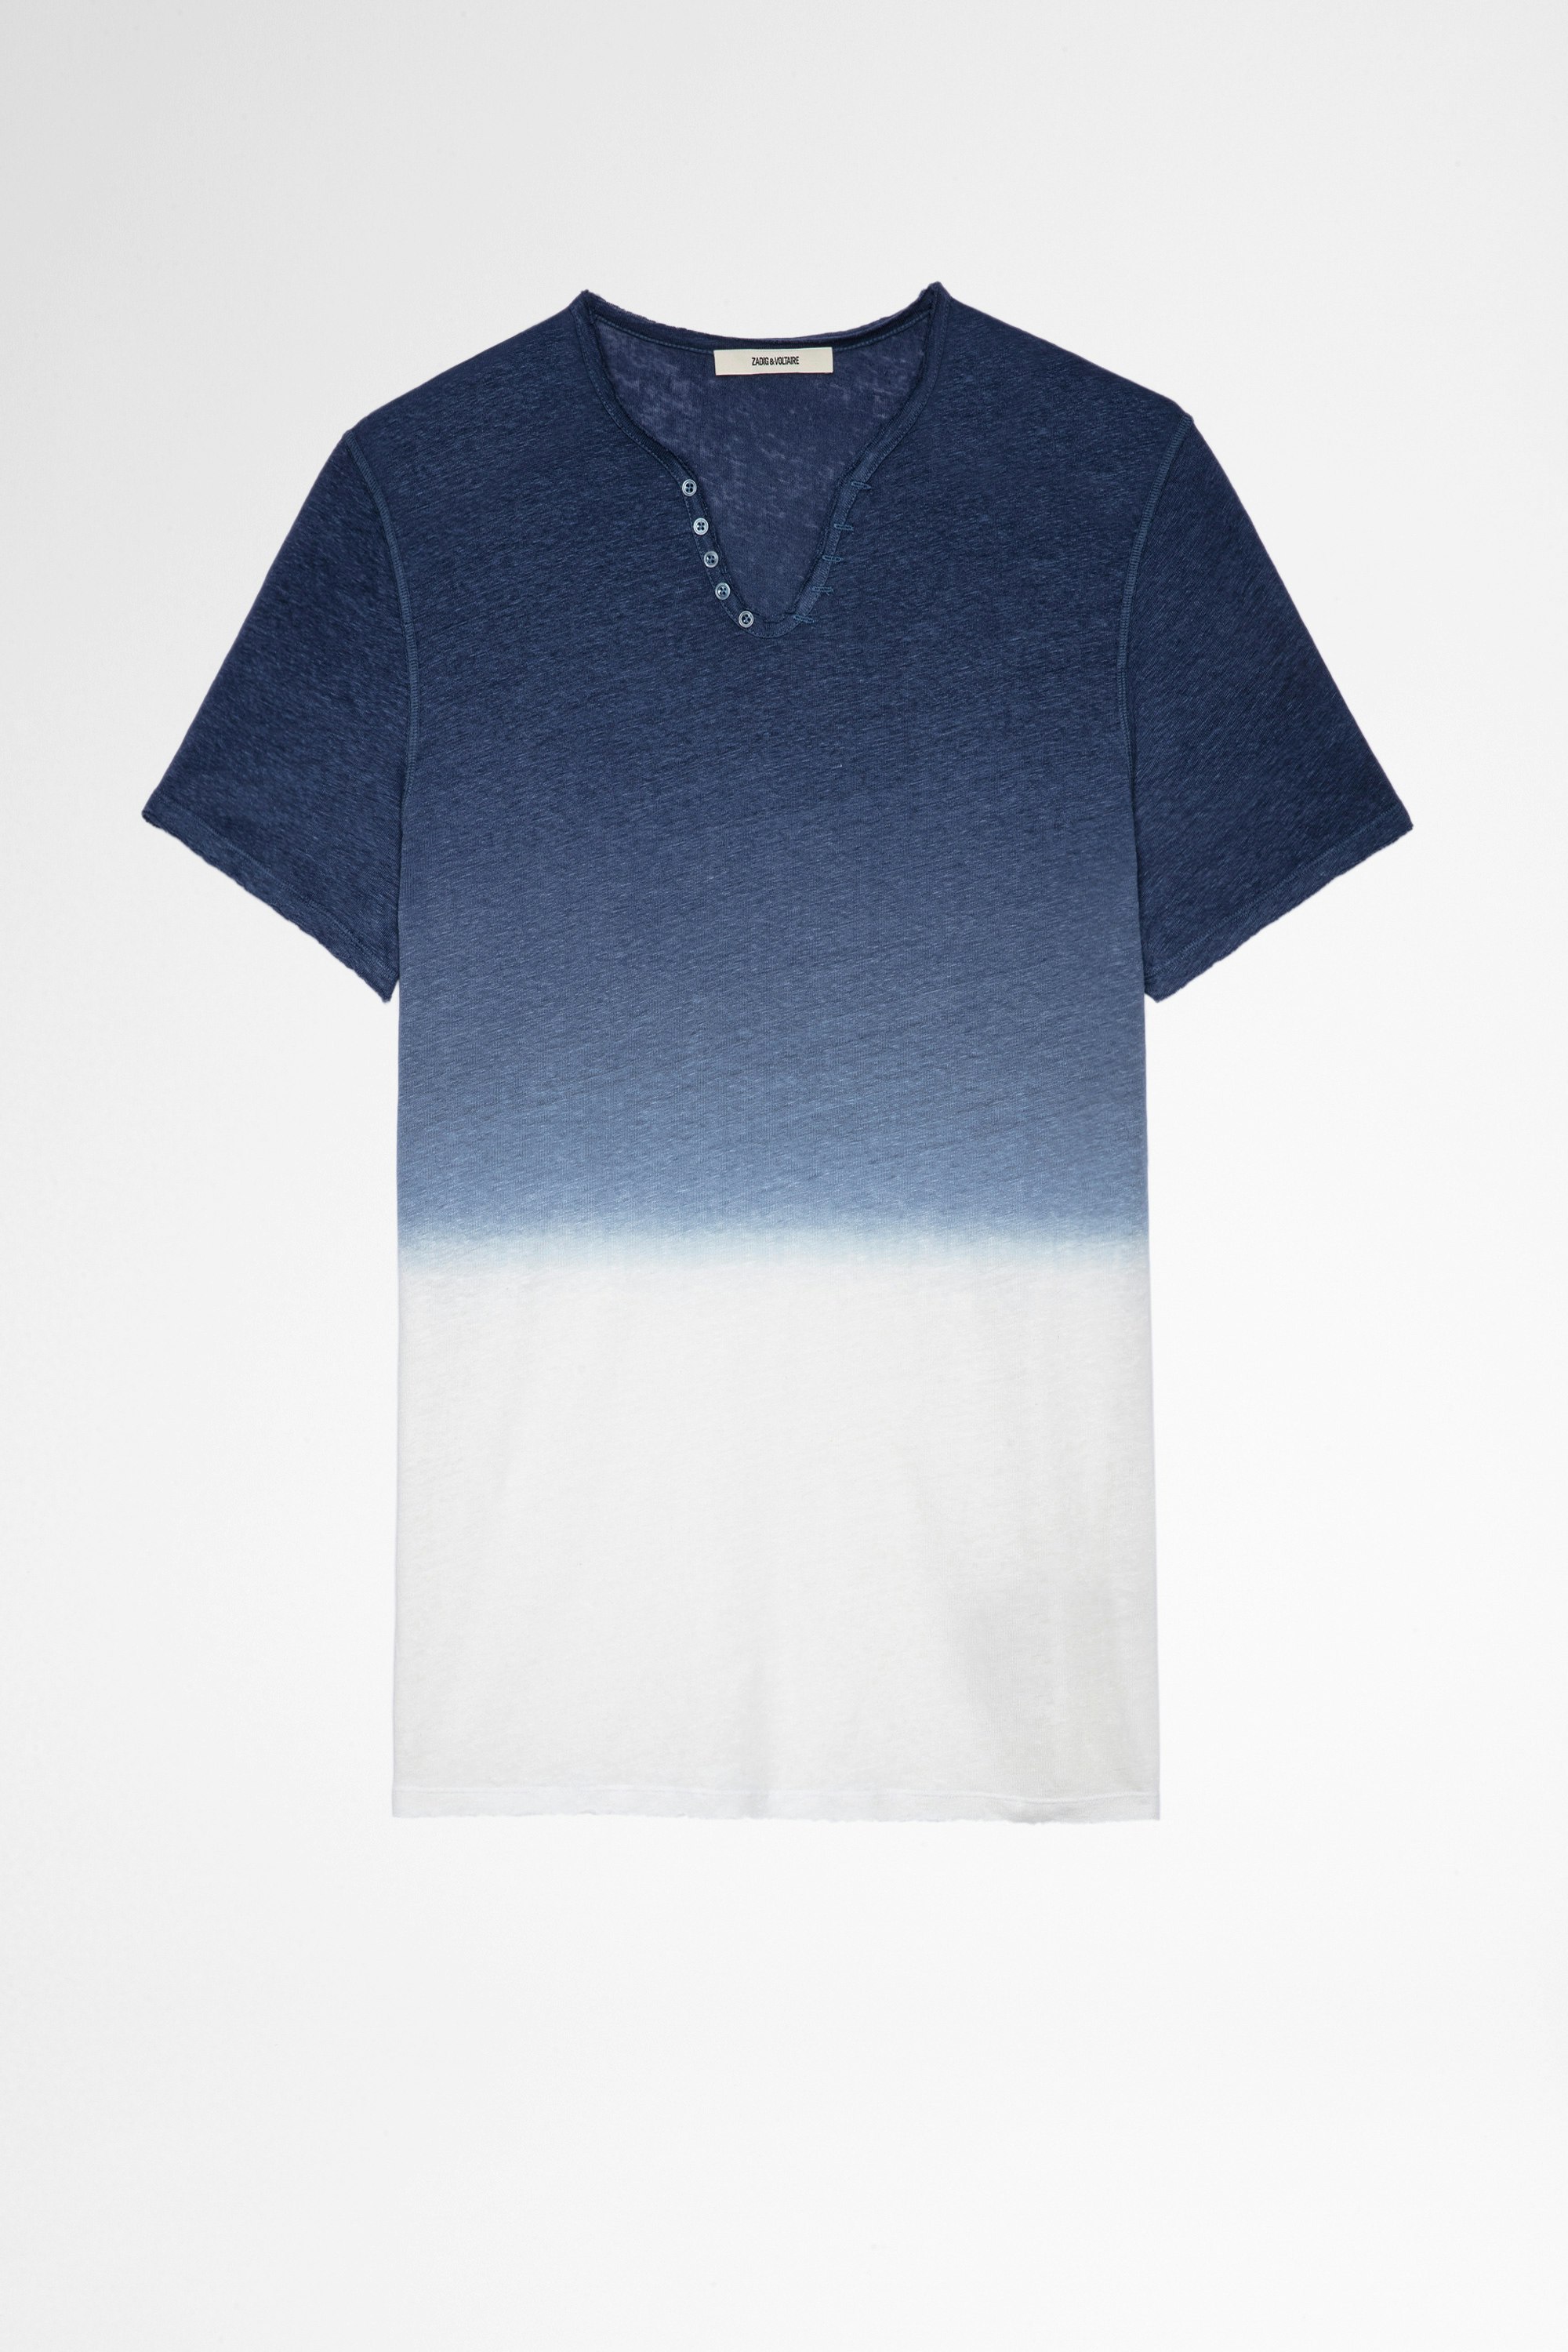 Camiseta Monastir Lino Camiseta azul de lino con cuello tunecino para hombre